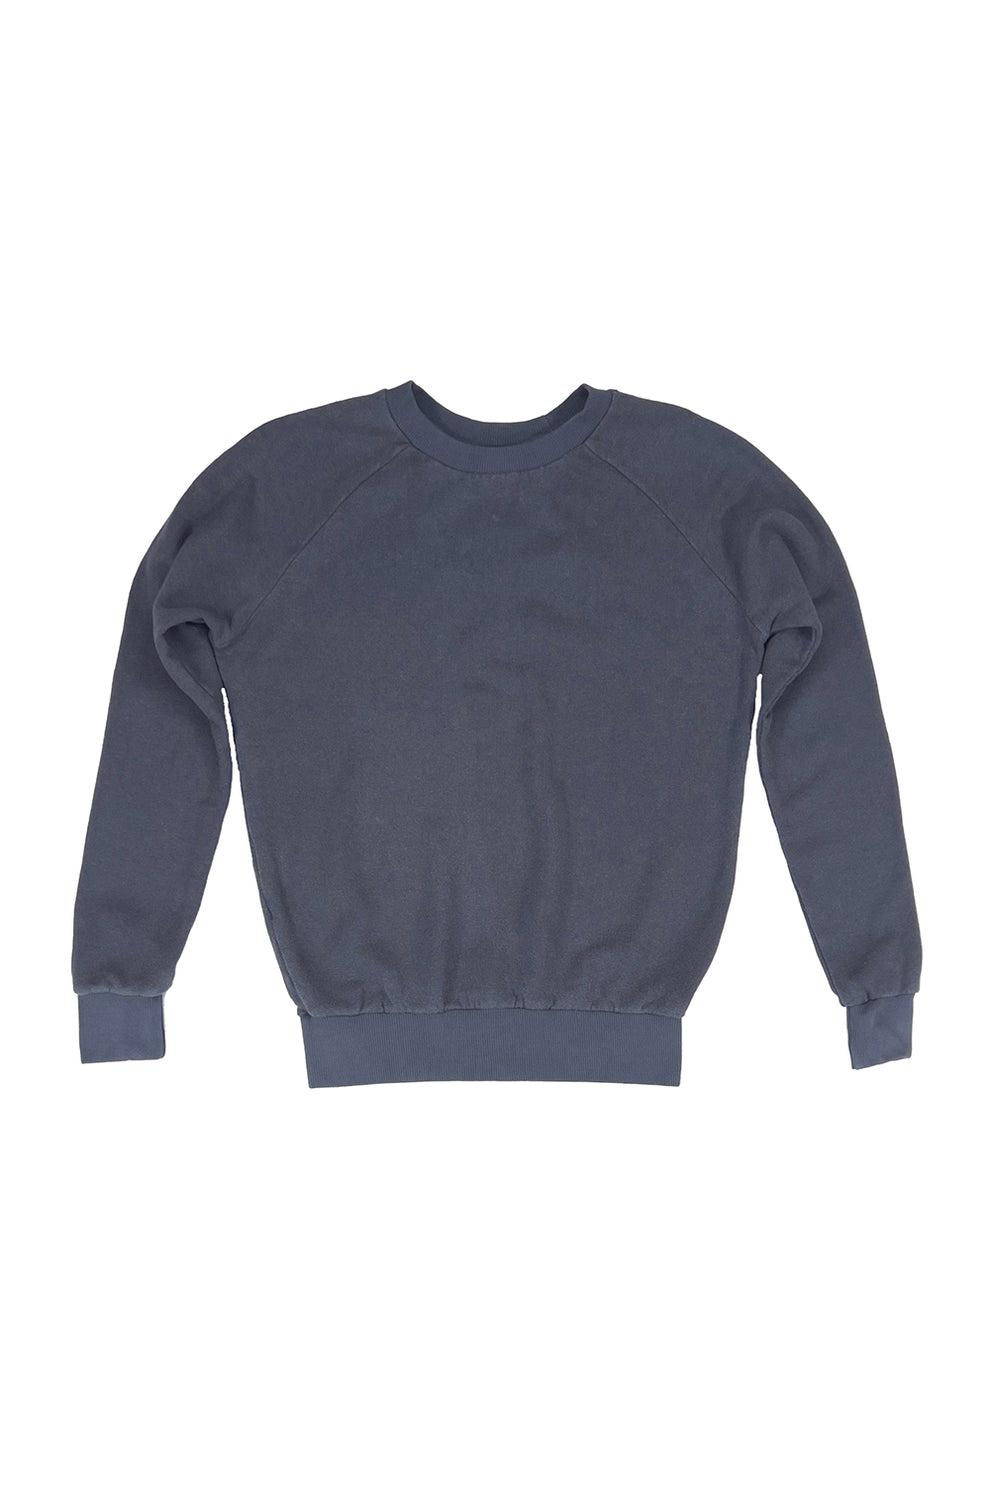 Alpine Raglan Sweatshirt | Jungmaven Hemp Clothing